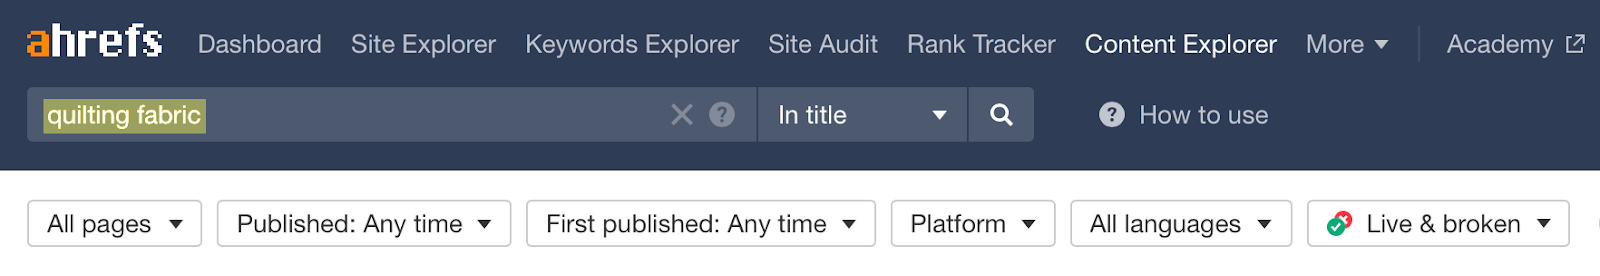 Content Explorer search